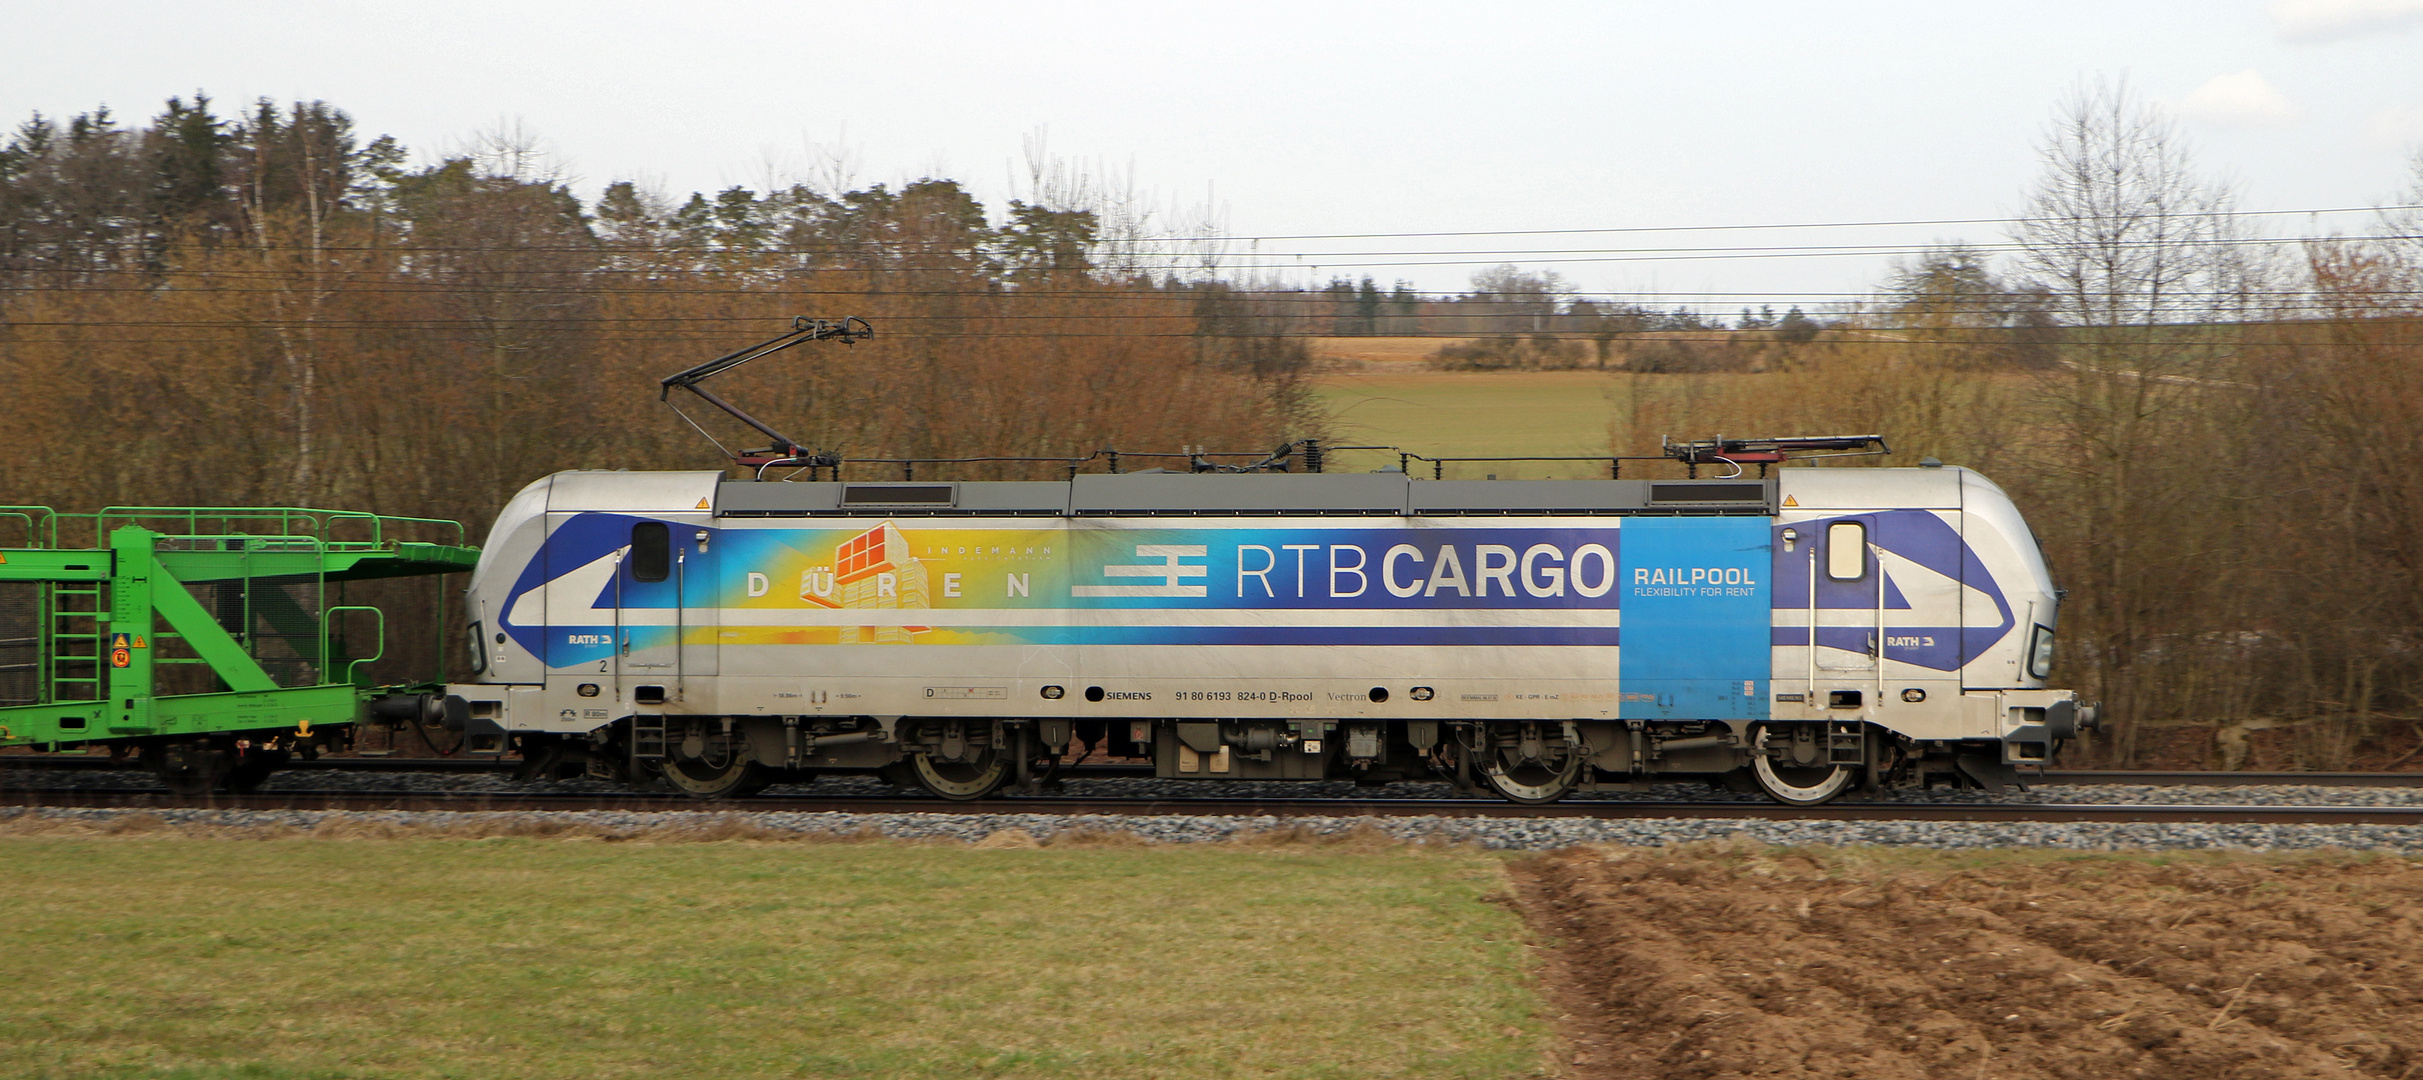 RTB CARGO / Railpool